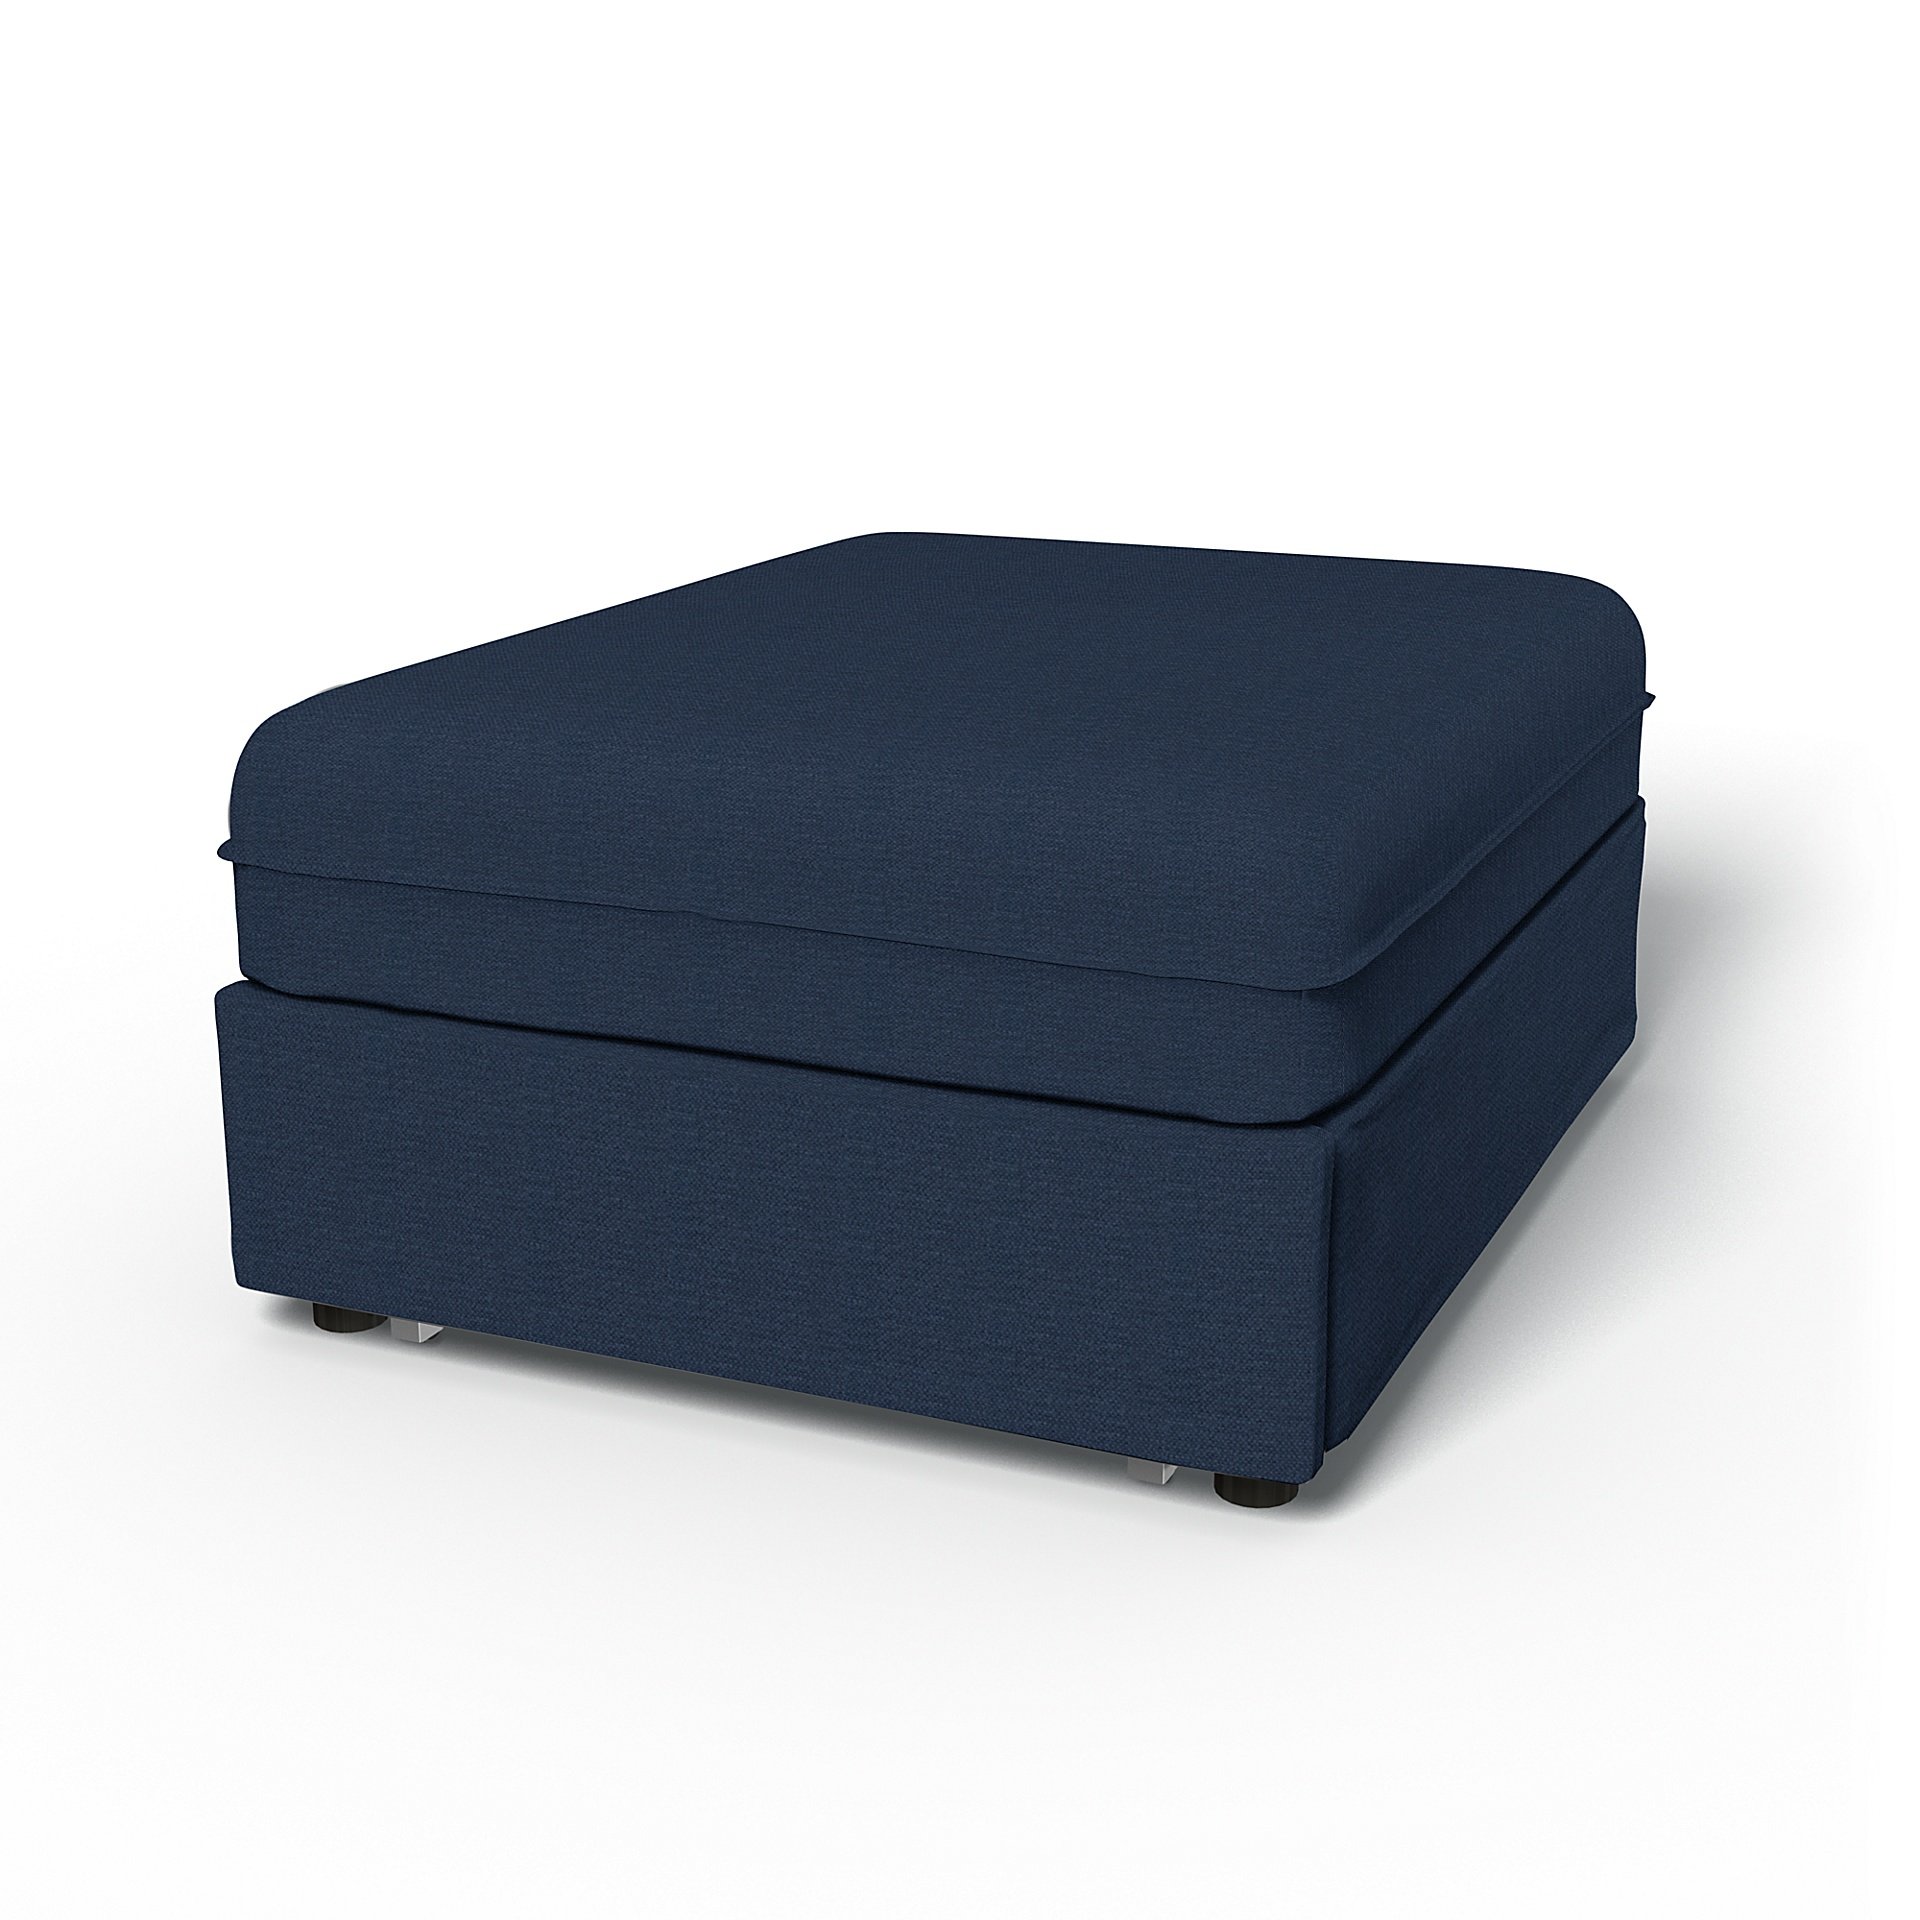 IKEA - Vallentuna Seat Module with Sofa Bed Cover 80x100cm 32x39in, Navy Blue, Linen - Bemz